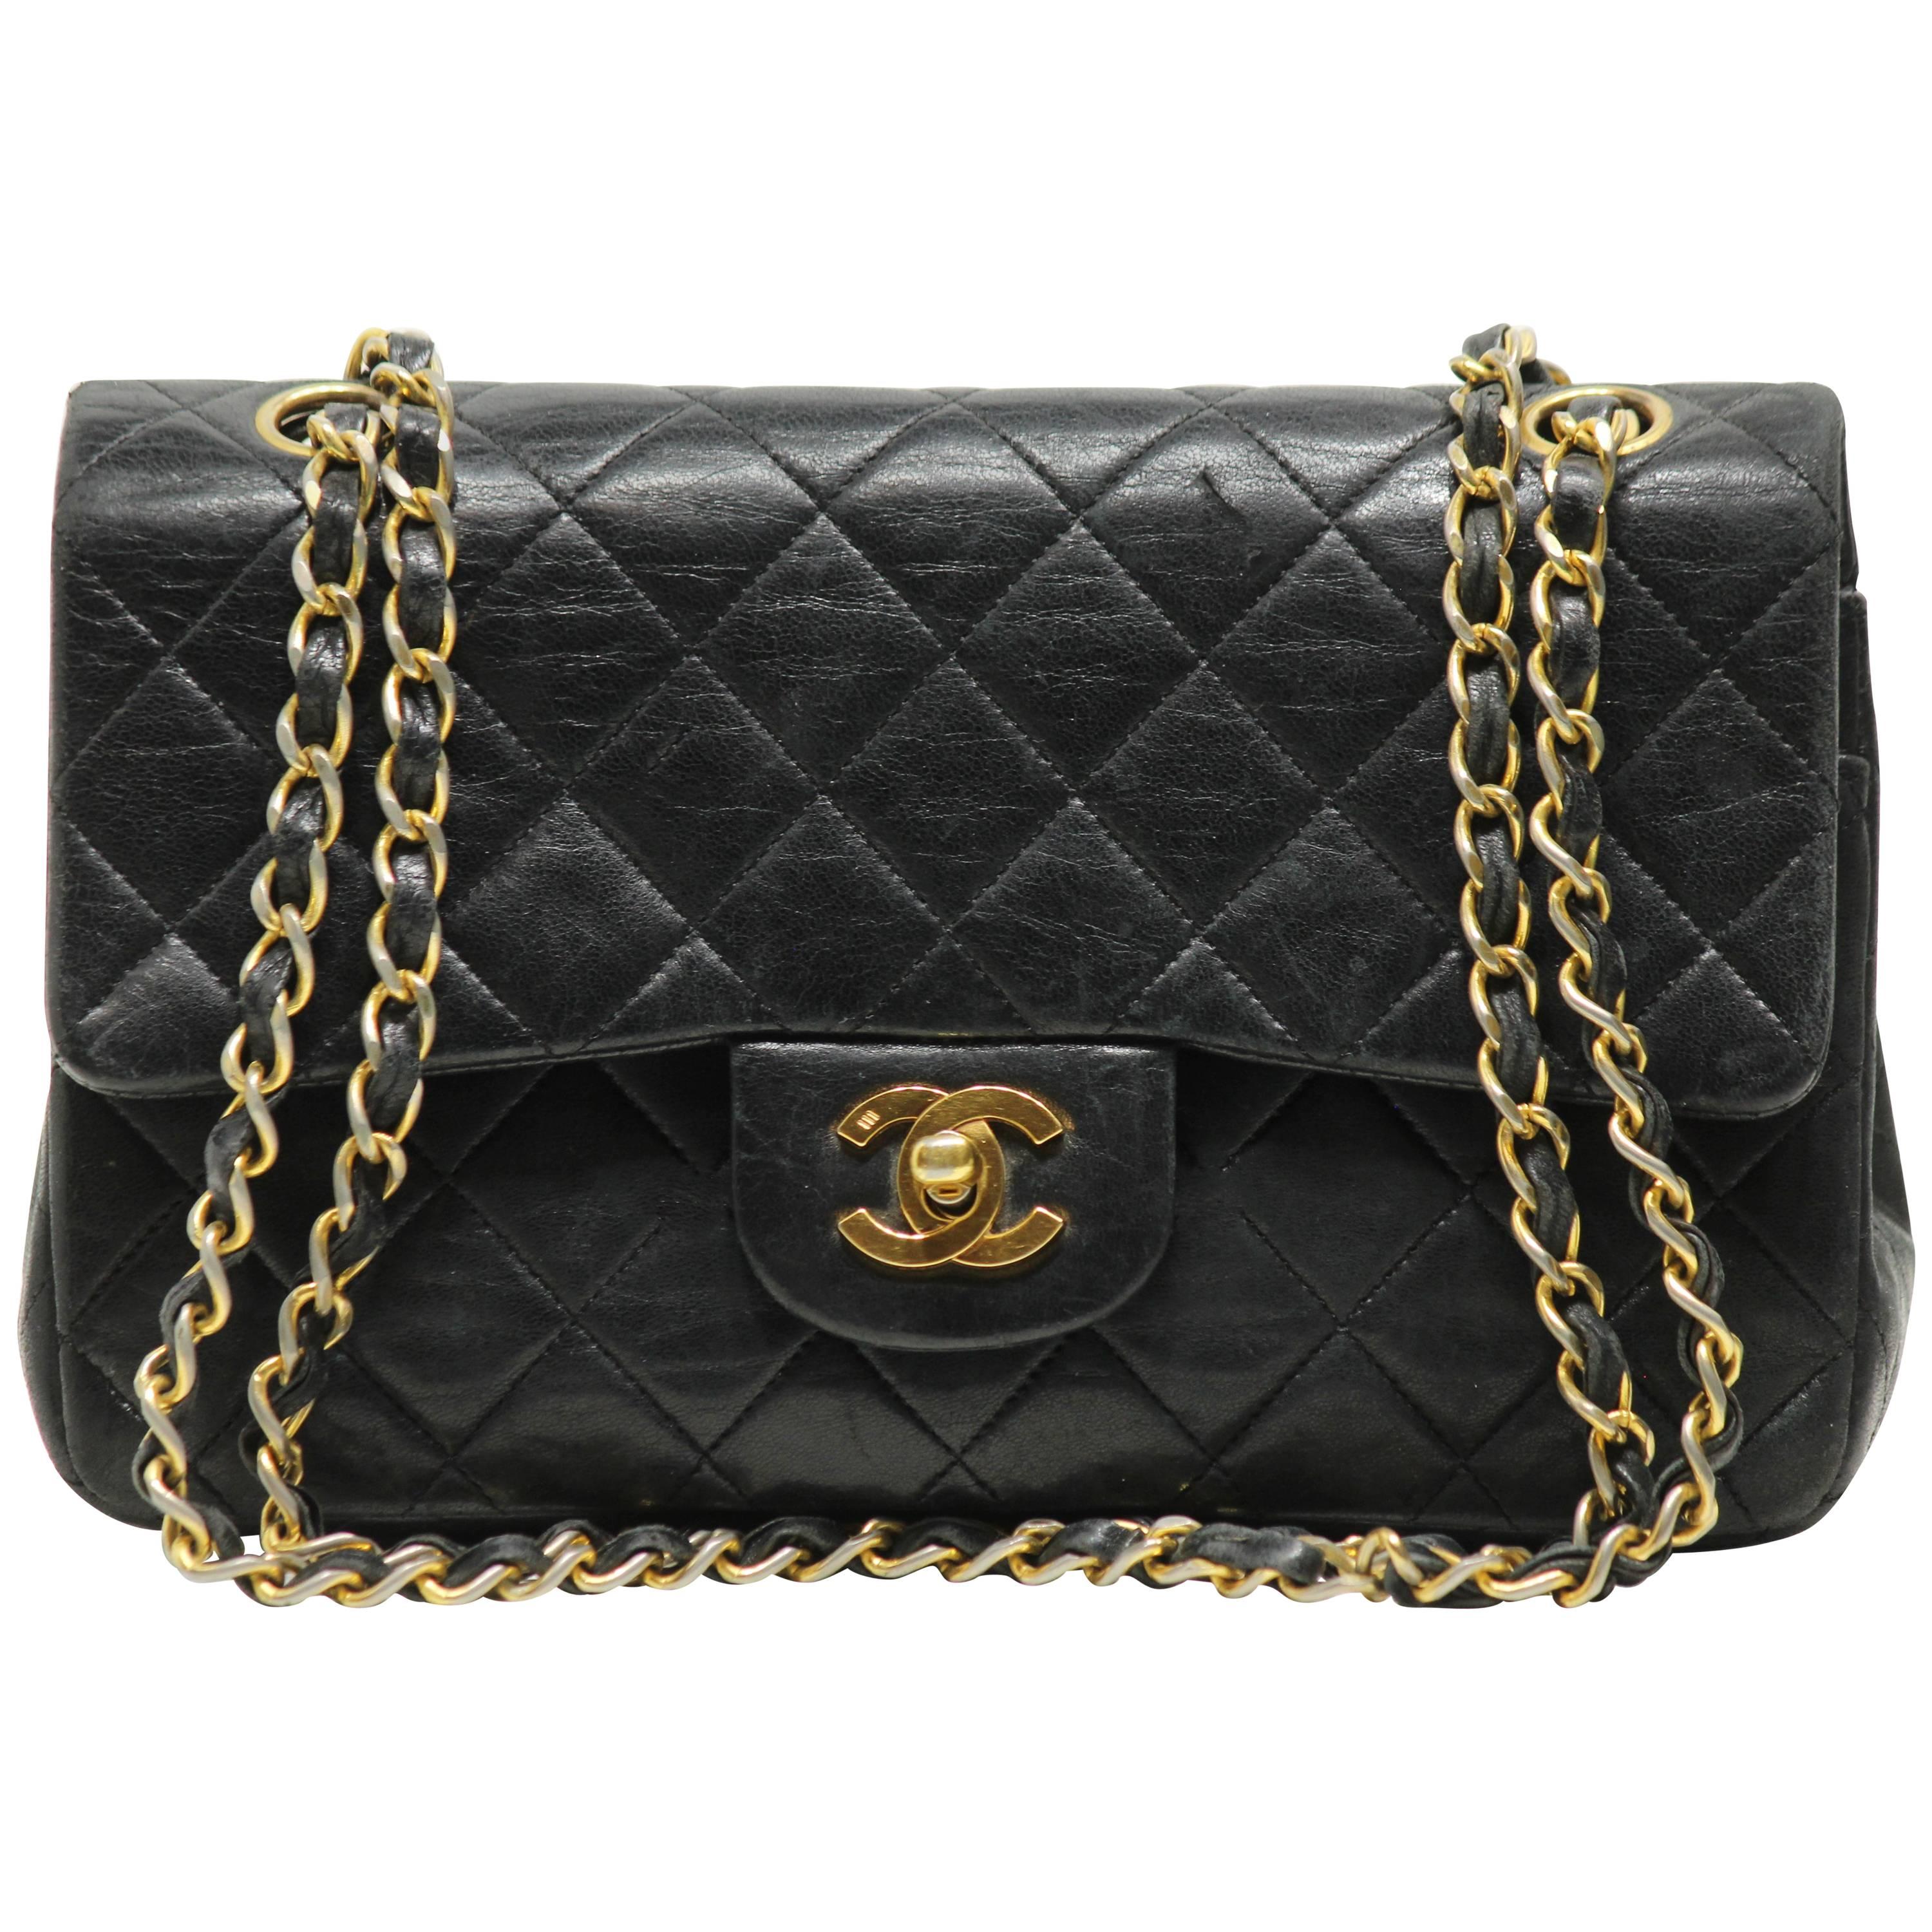 Iconic Chanel Small Flap Bag Black Lambskin Leather Matelasse Vintage 1980s